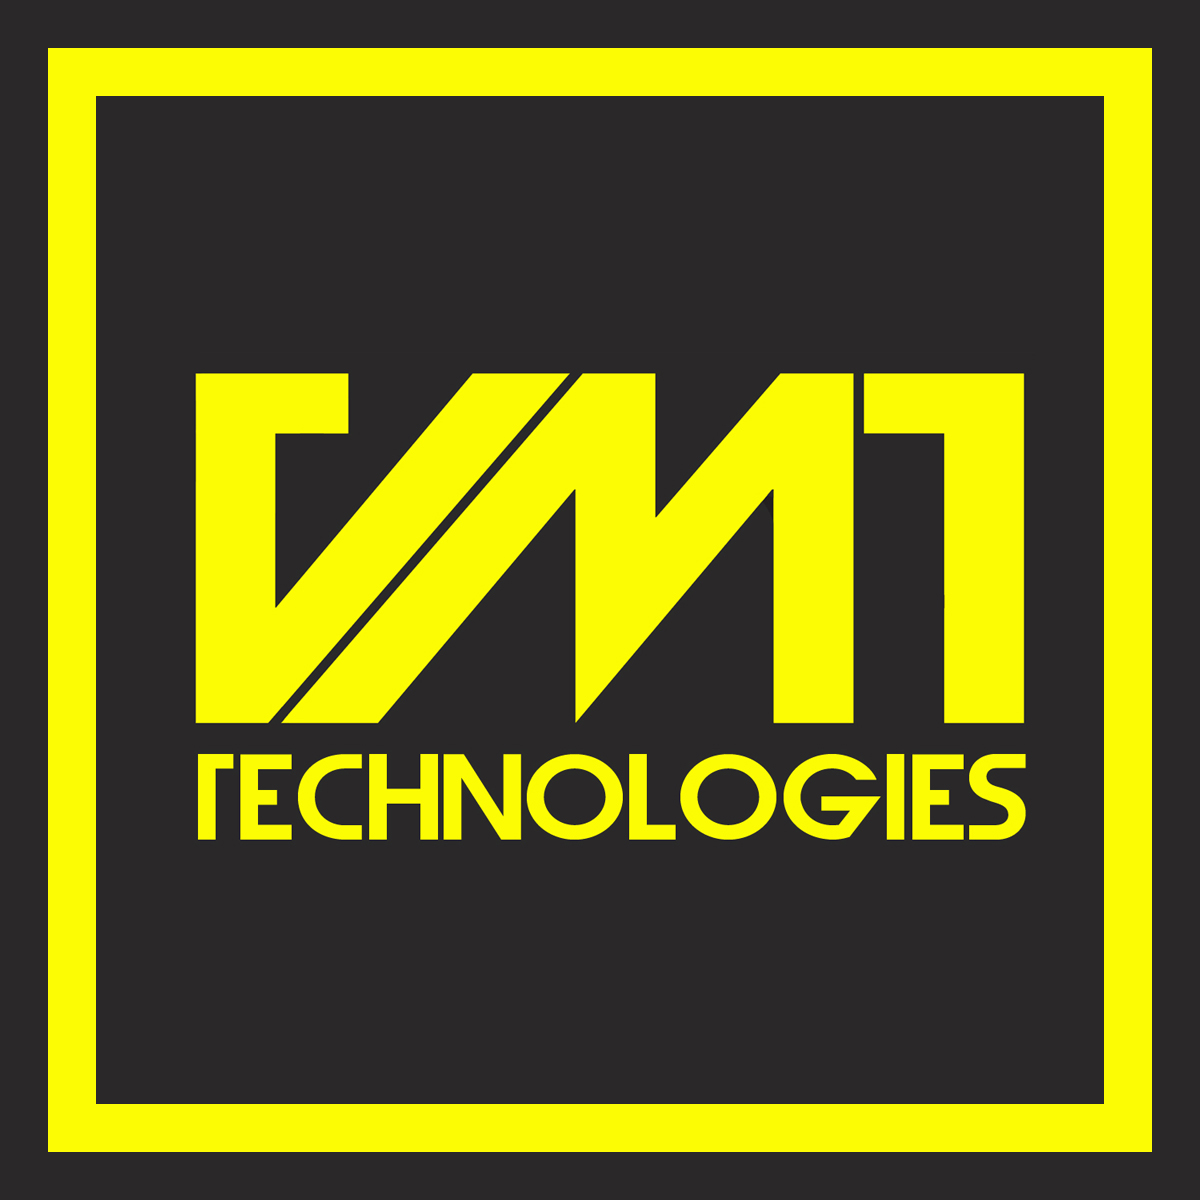 VM Technologies professional web design company